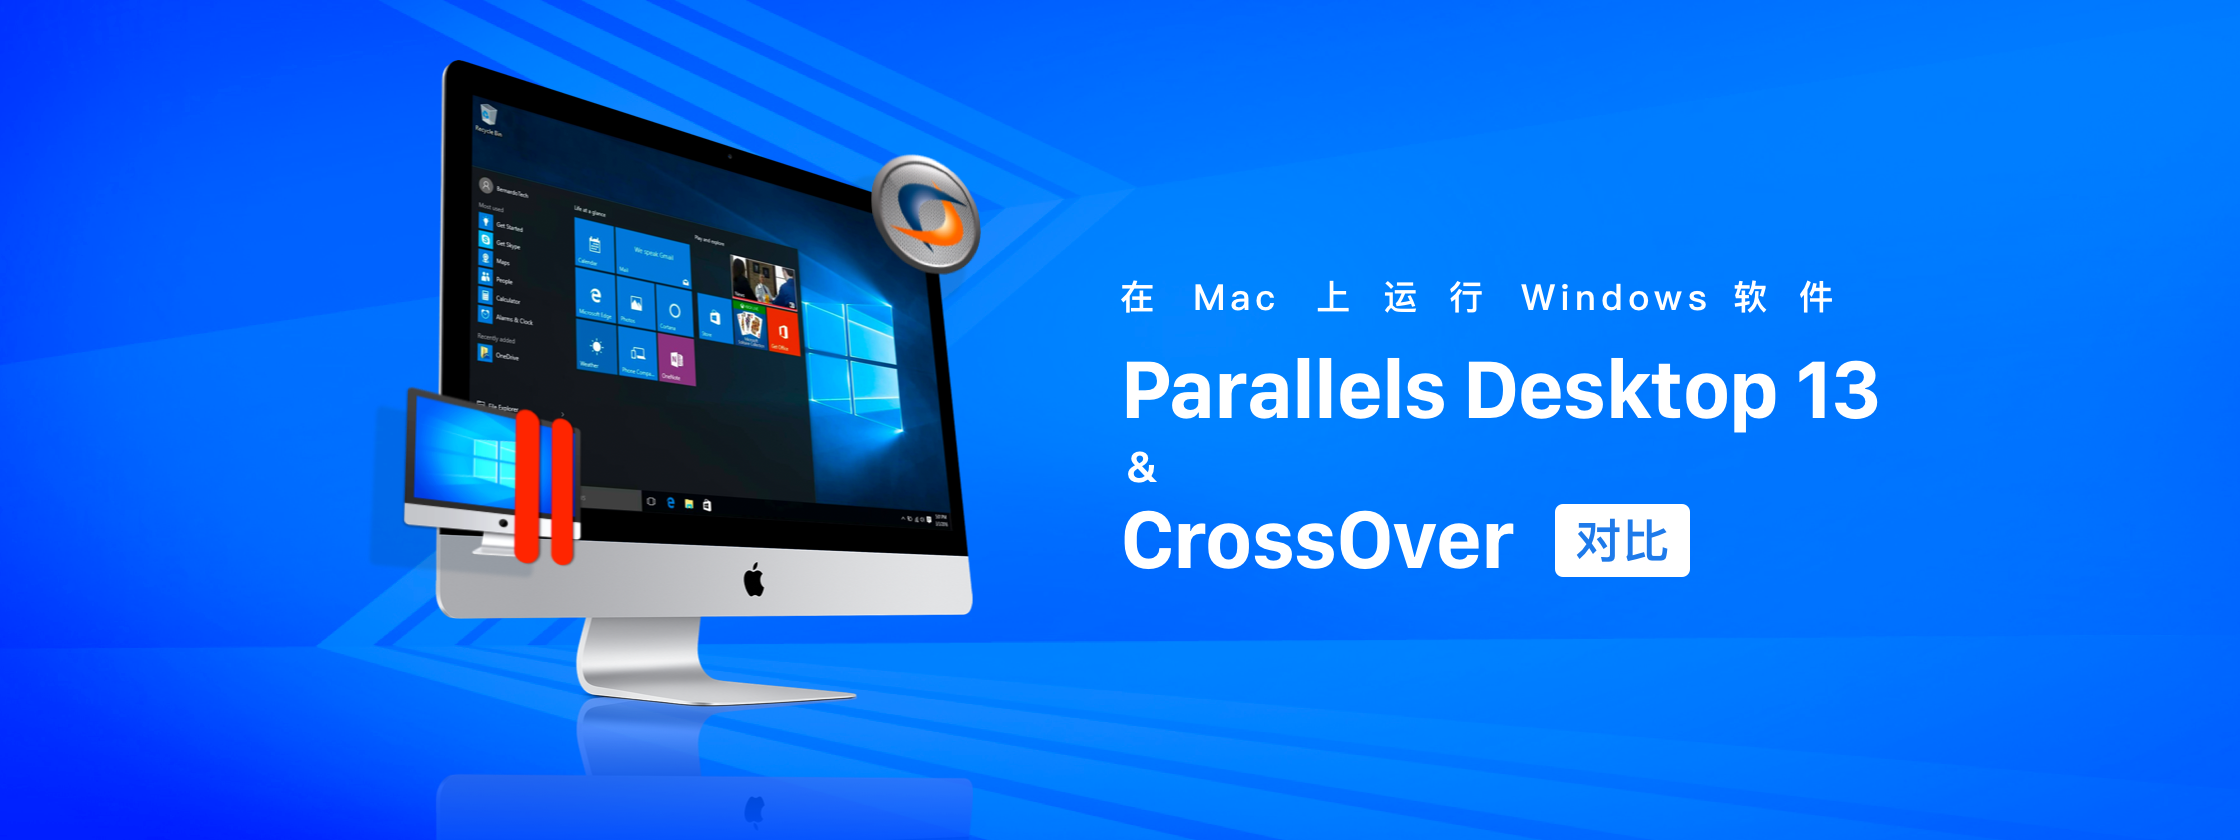 Mac 运行 Windows 软件，Parallels Desktop 和 CrossOver 哪一款更适合你？